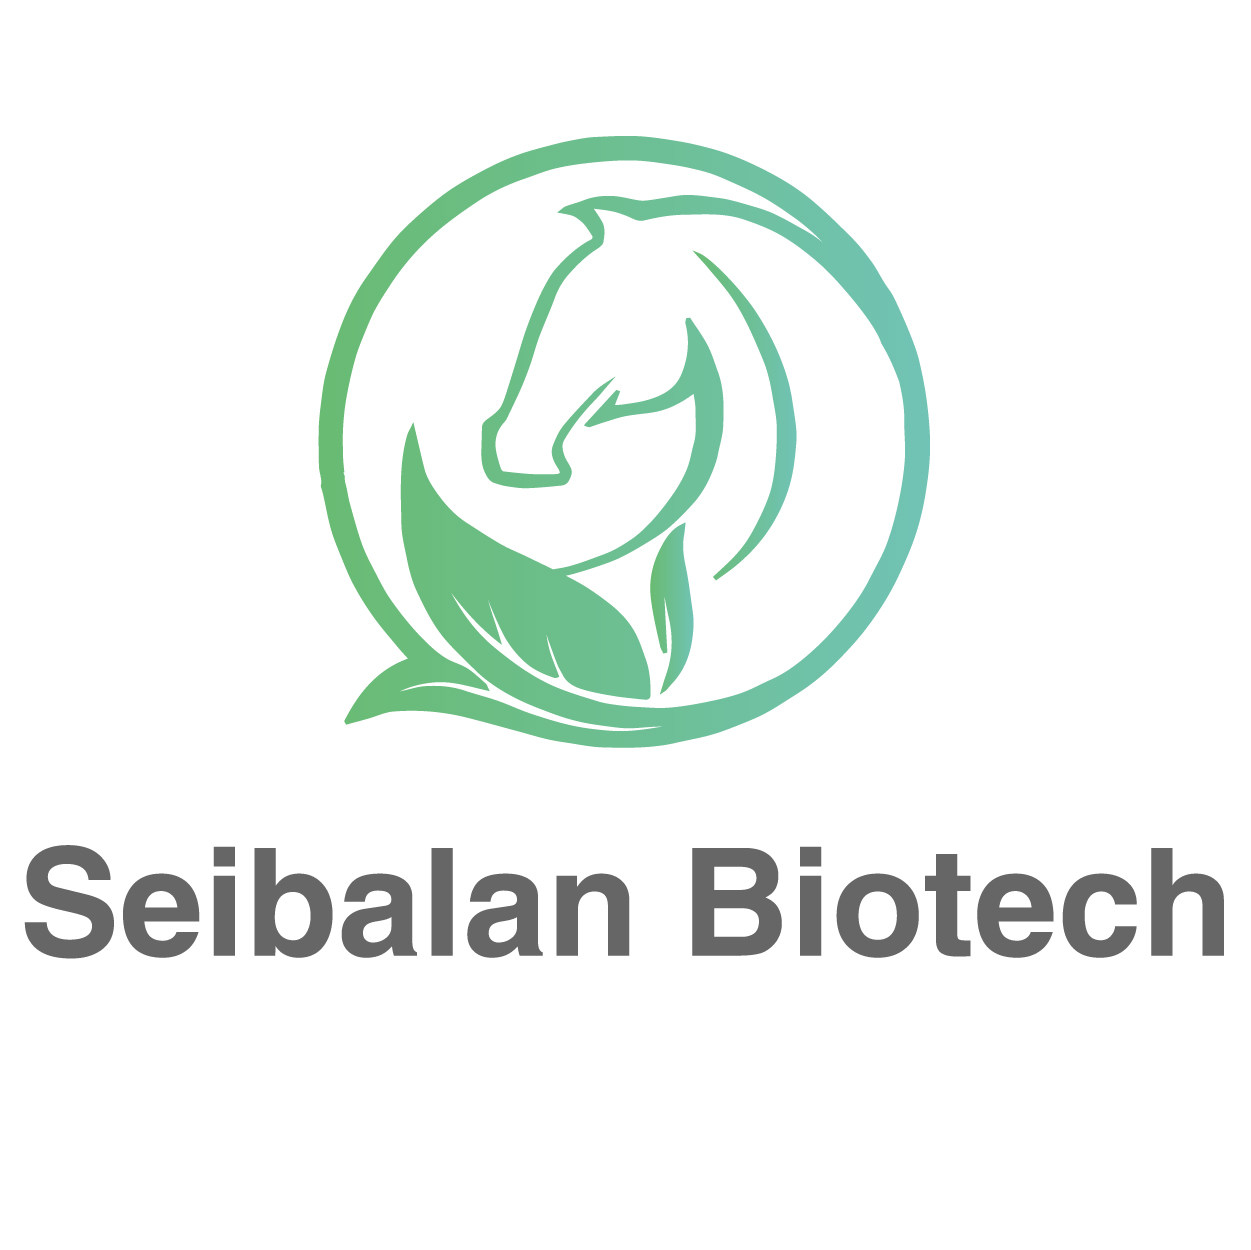 Shaanxi Seibalan Biotech Co., Ltd